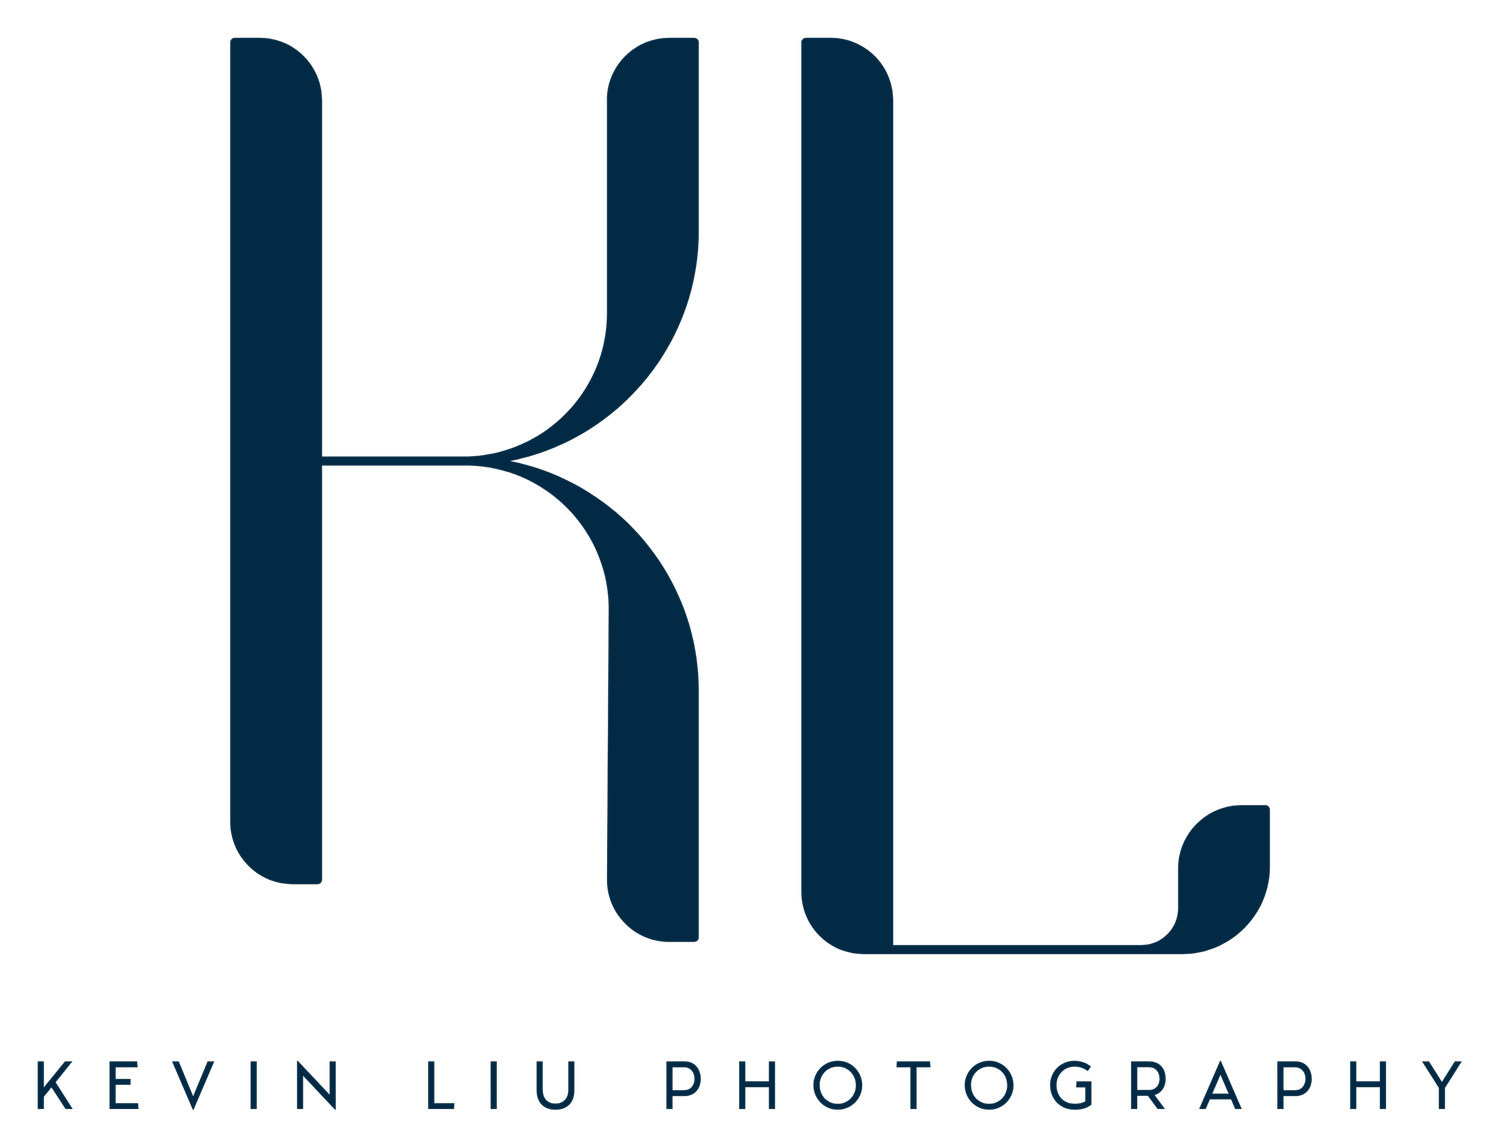 Kevin Liu Photography